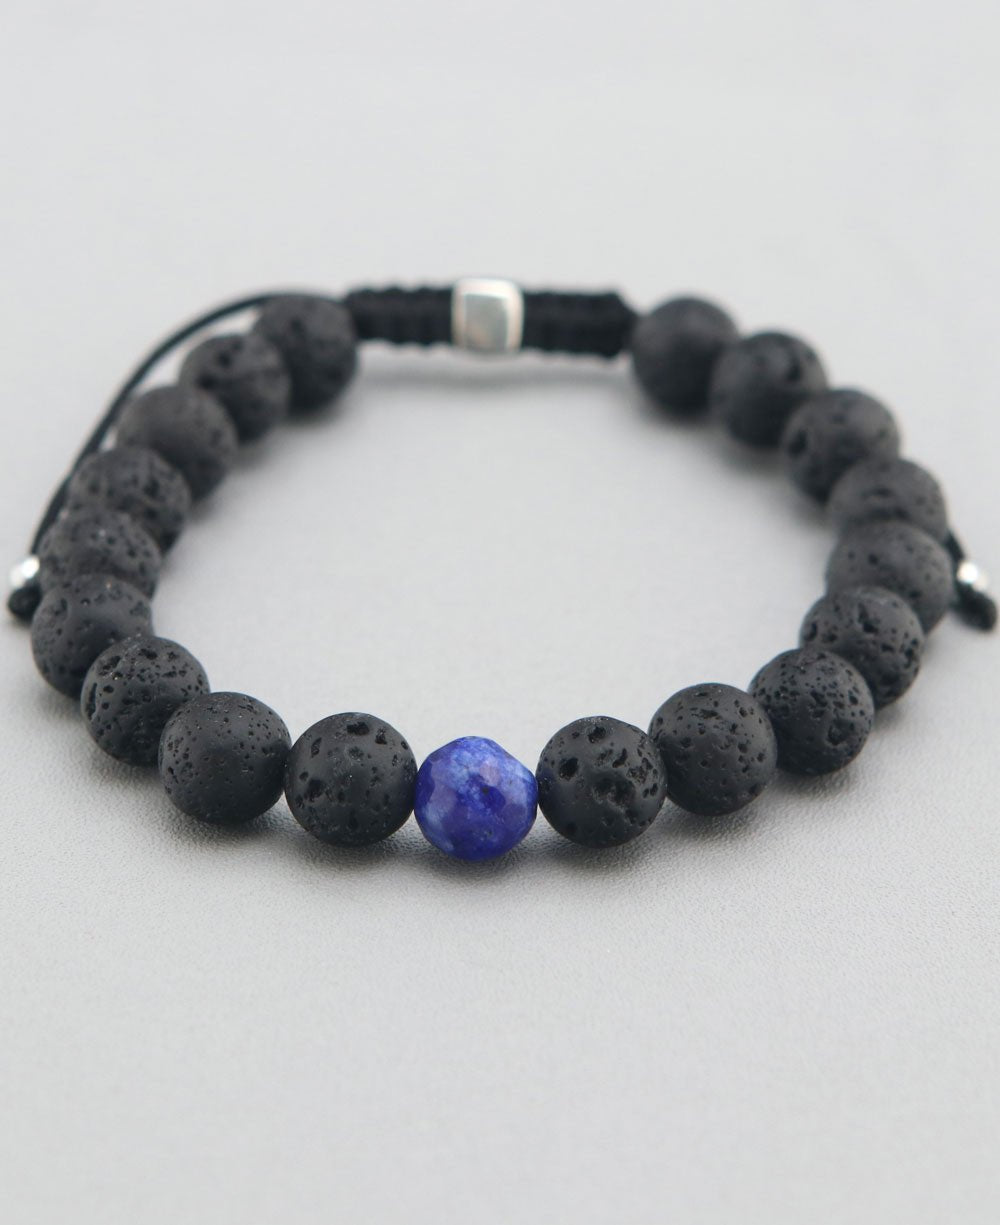 Lava Beads Adjustable Mala Bracelet with Healing Gemstone - Amethyst